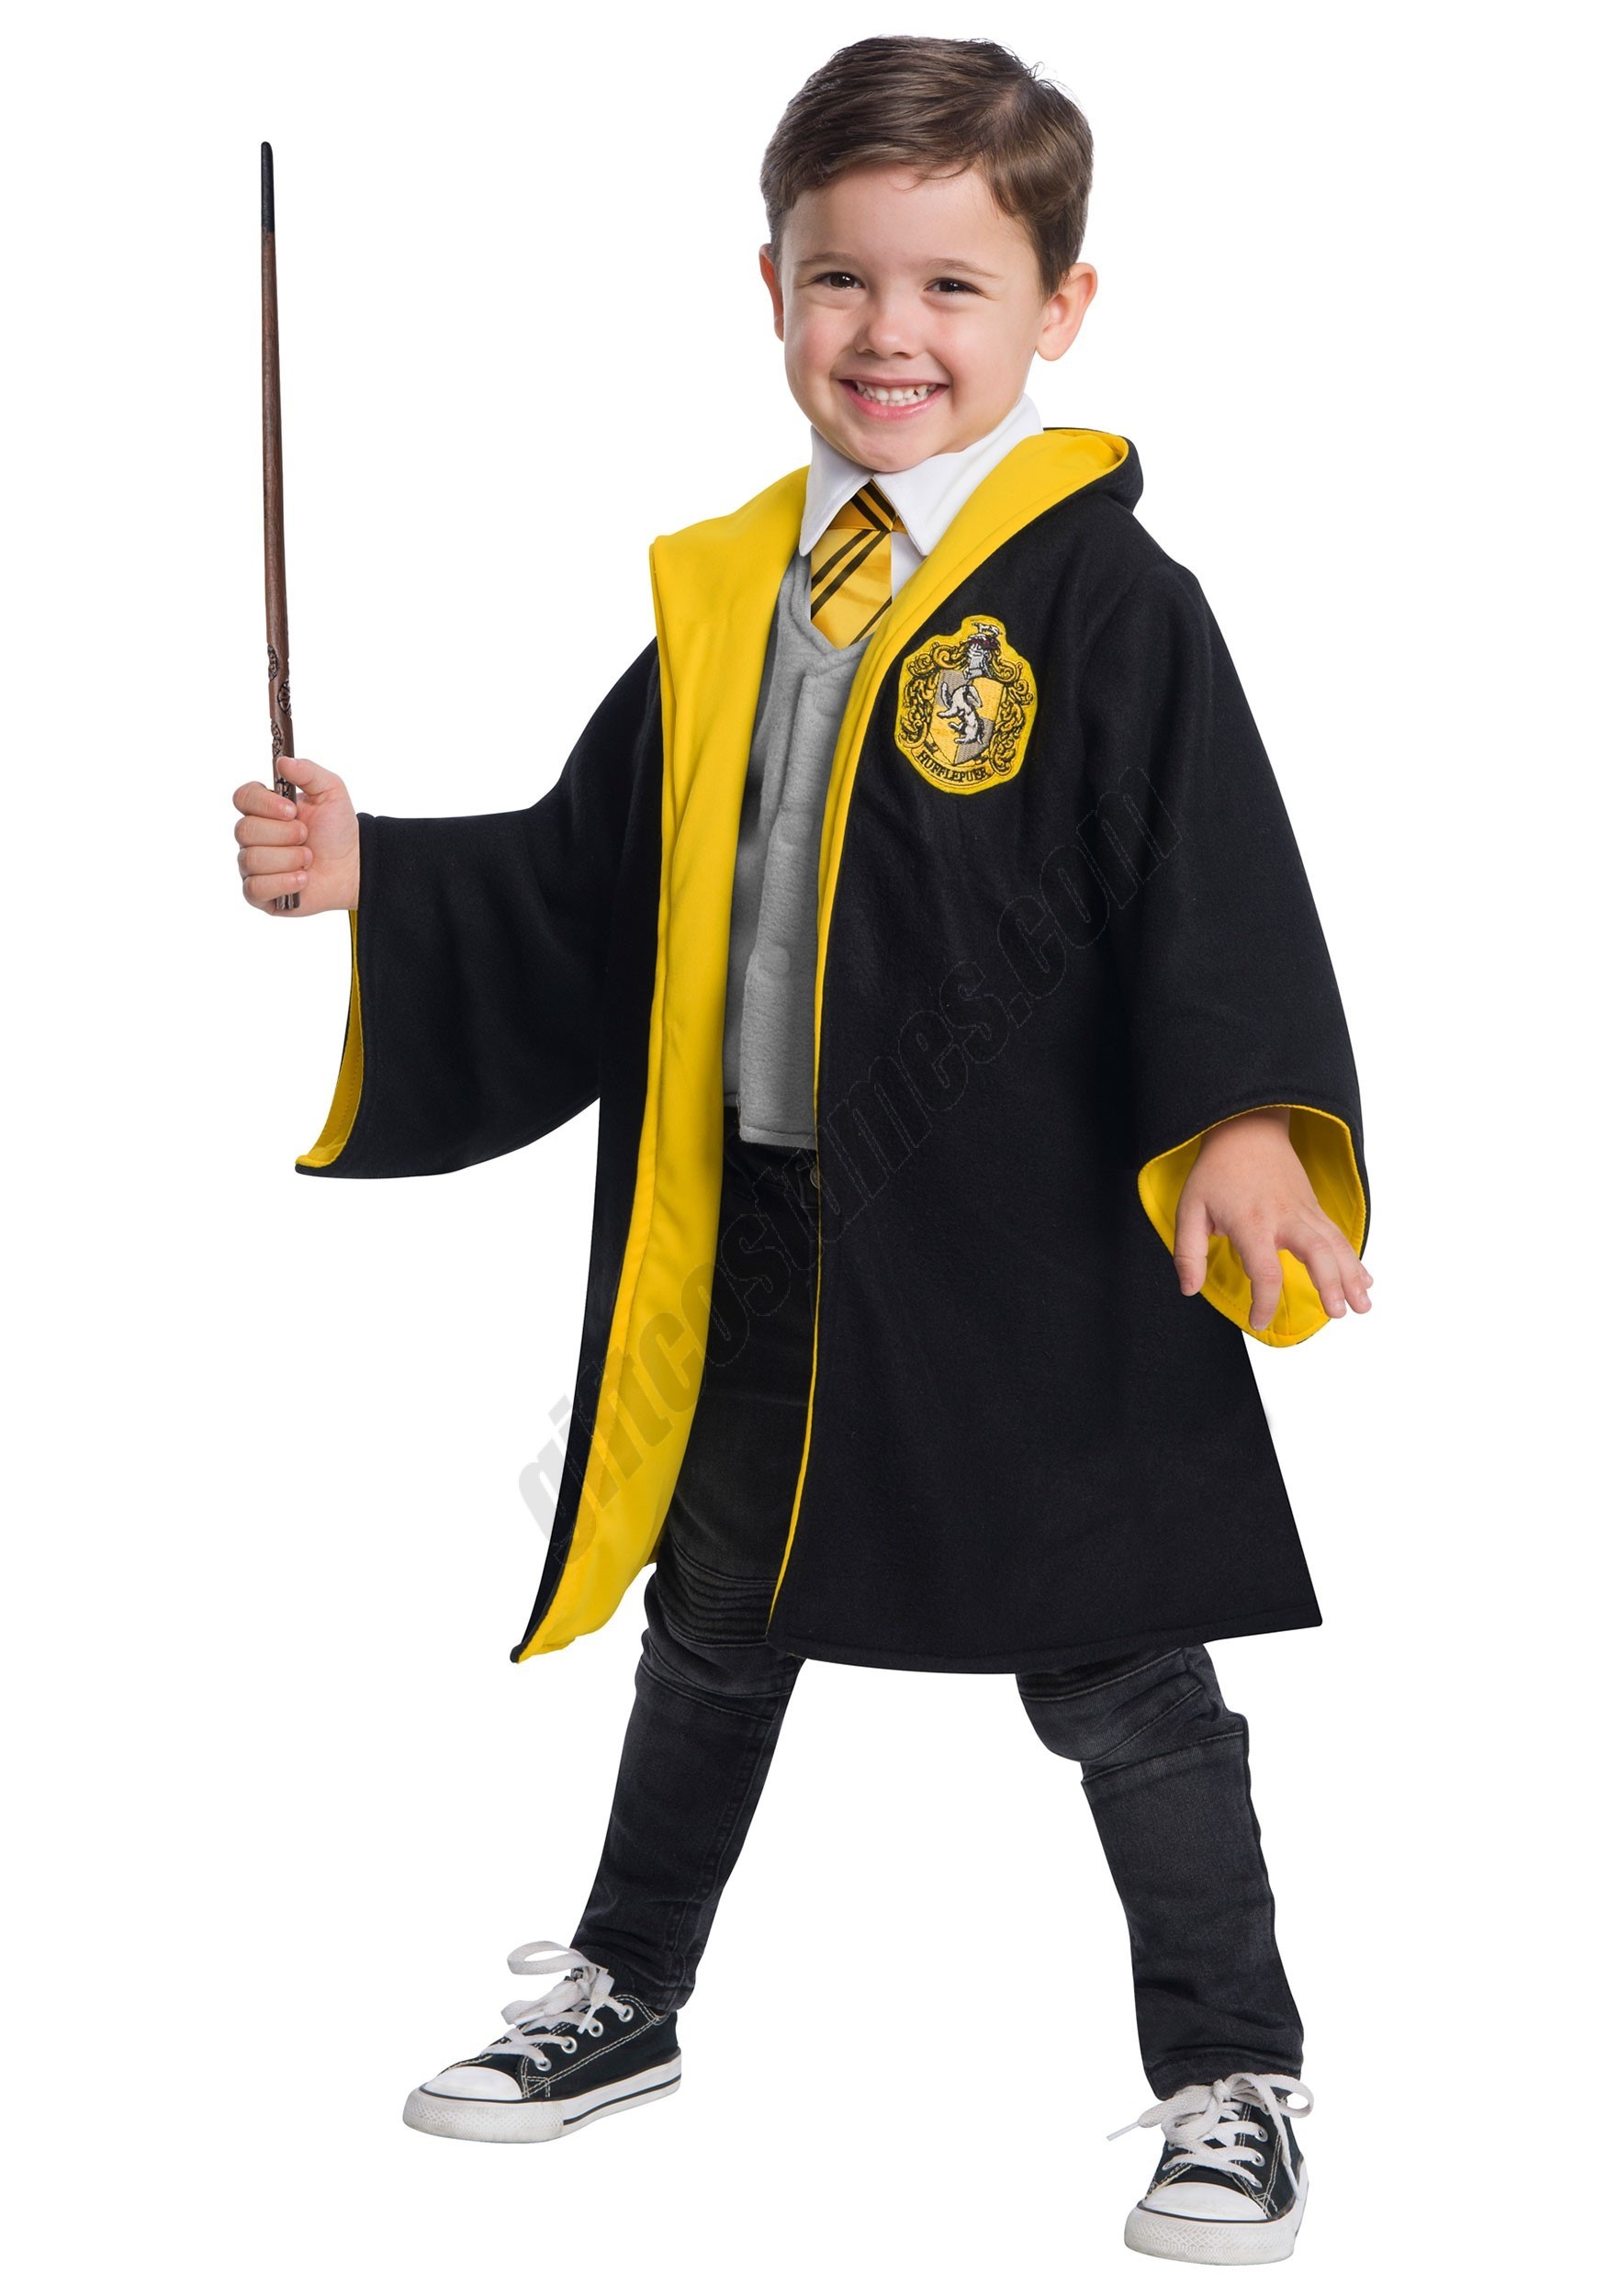 Harry Potter Toddler Hufflepuff Costume Promotions - Harry Potter Toddler Hufflepuff Costume Promotions